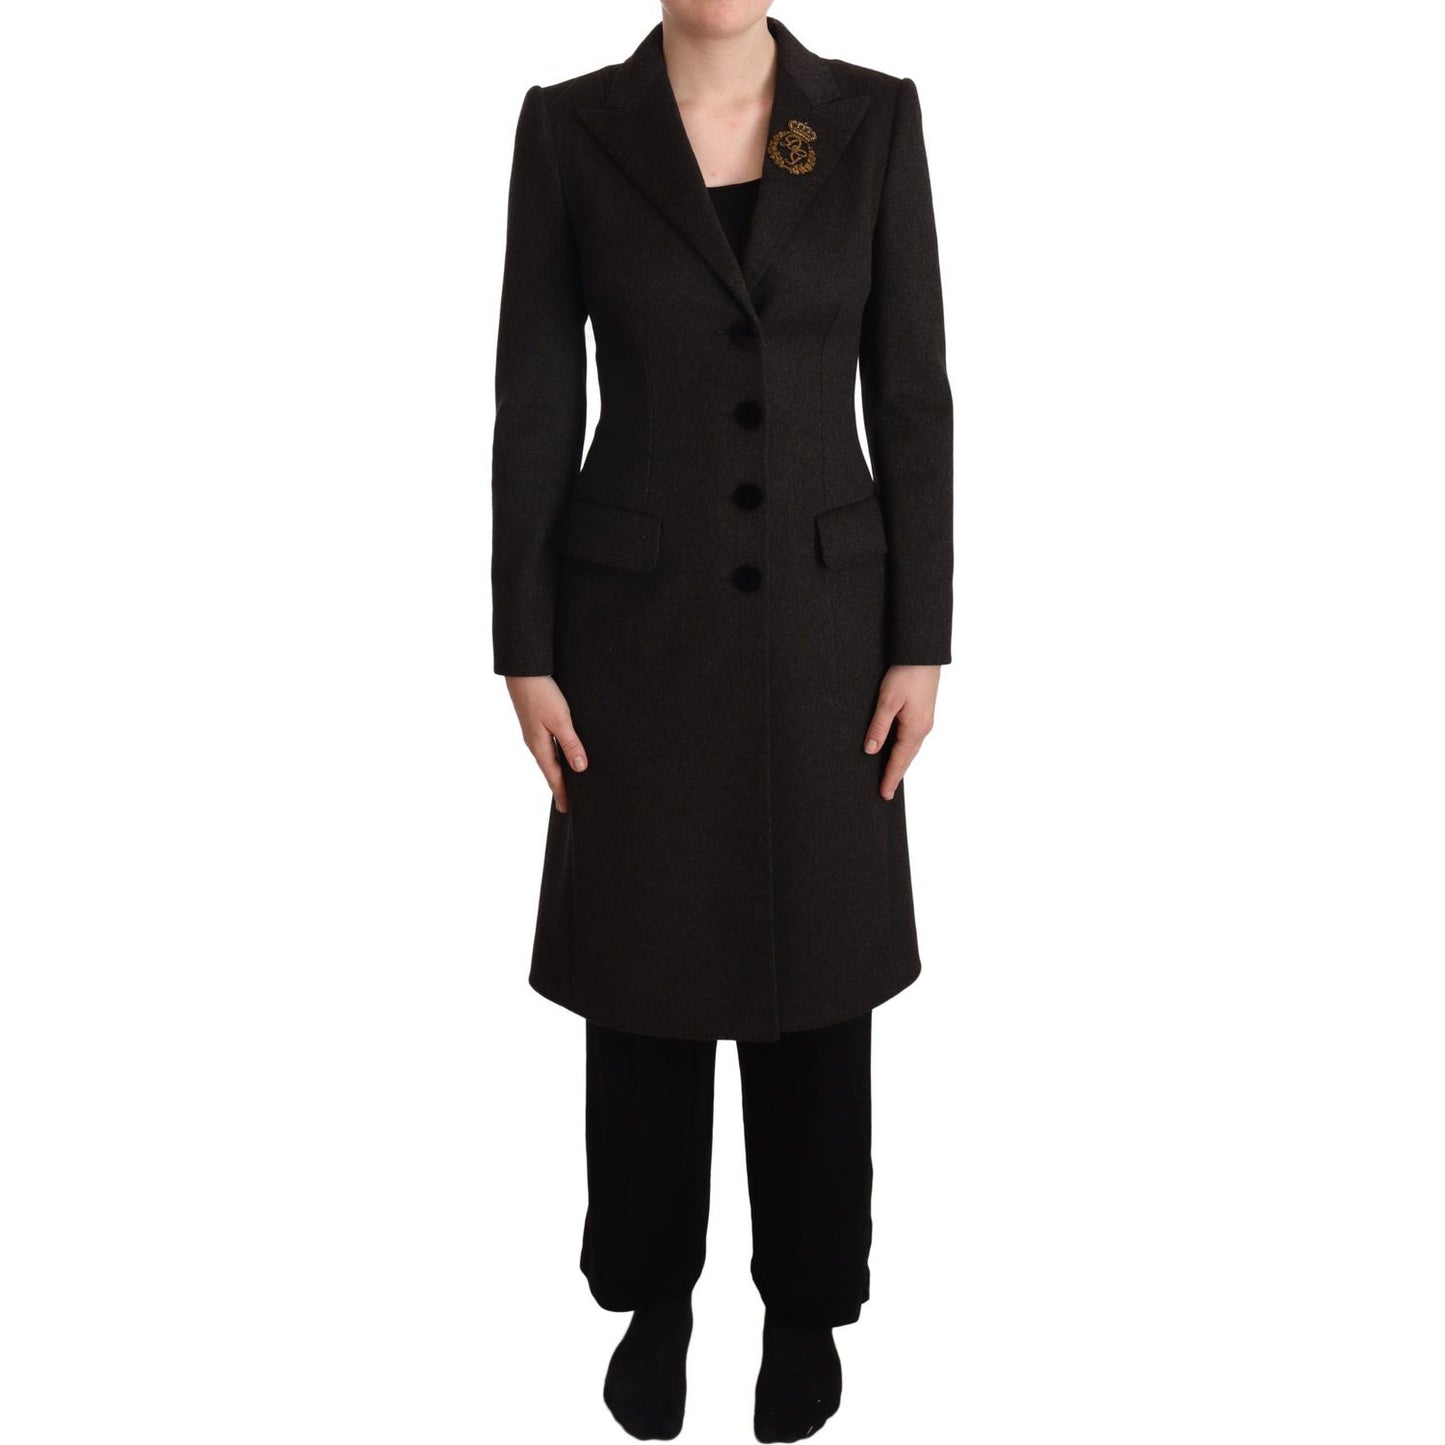 Dolce & Gabbana Elegant Wool-Cashmere Blend Coat in Black Gray gray-wool-cashmere-coat-crest-applique-jacket IMG_1300-scaled-786c3c48-201.jpg